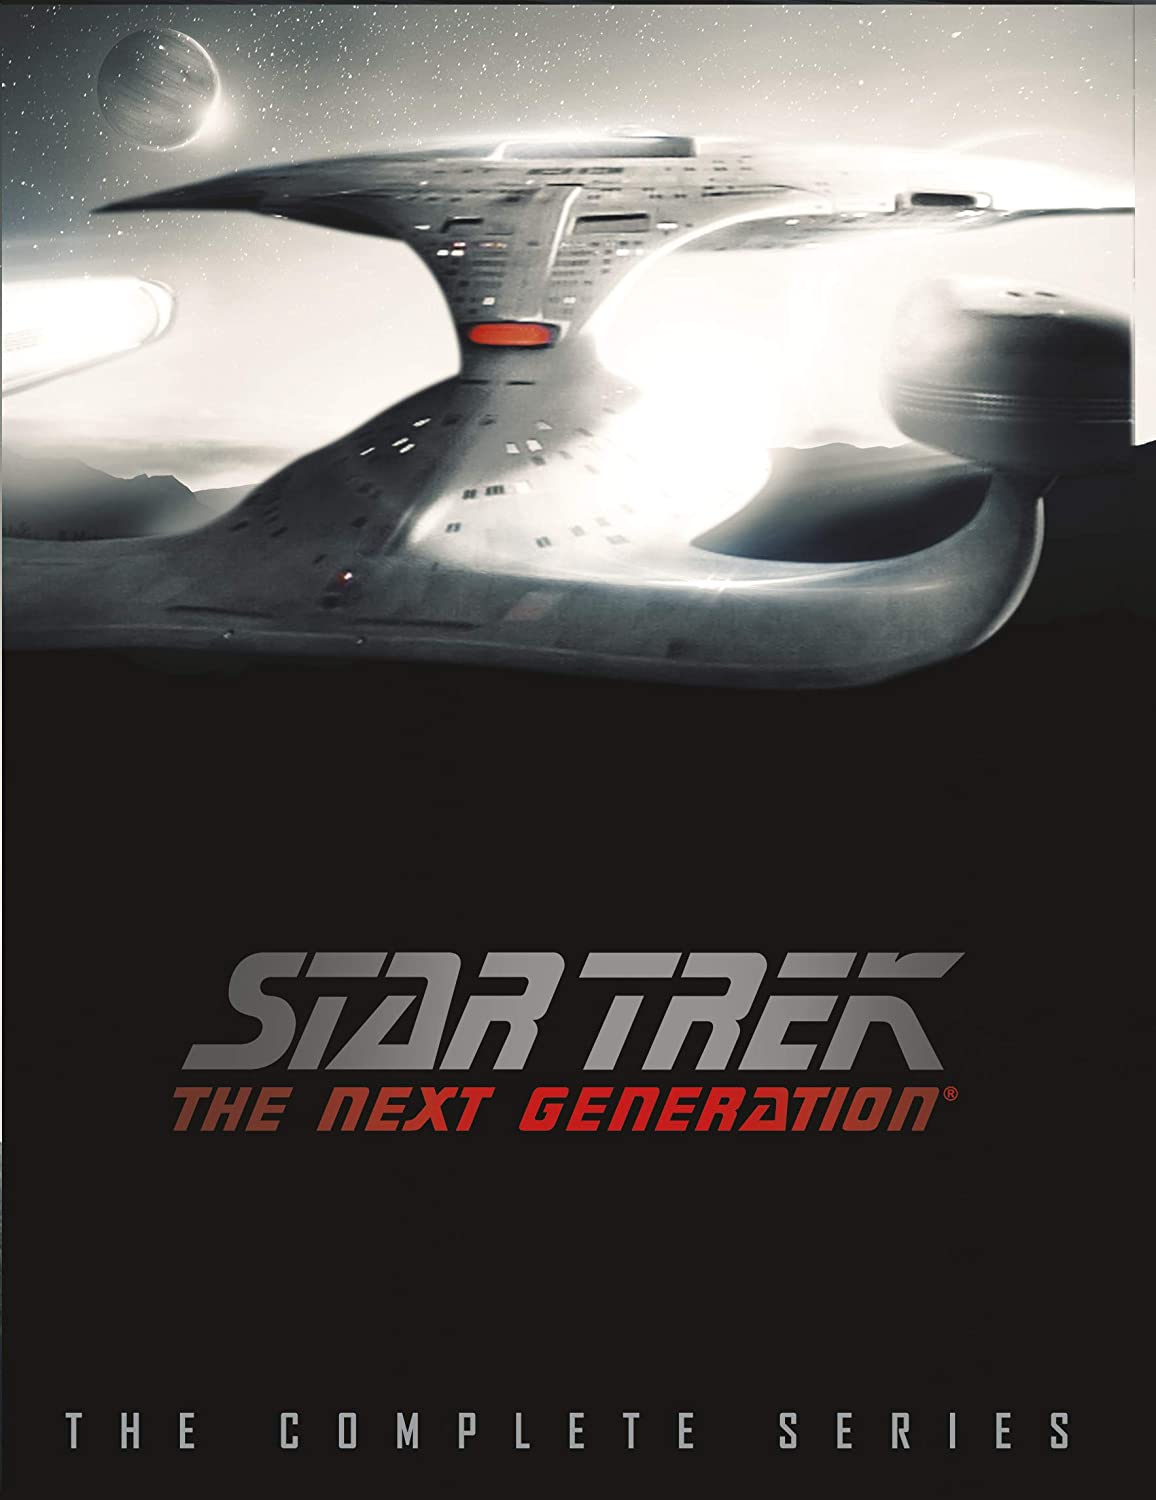 "Star Trek: The Next Generation"